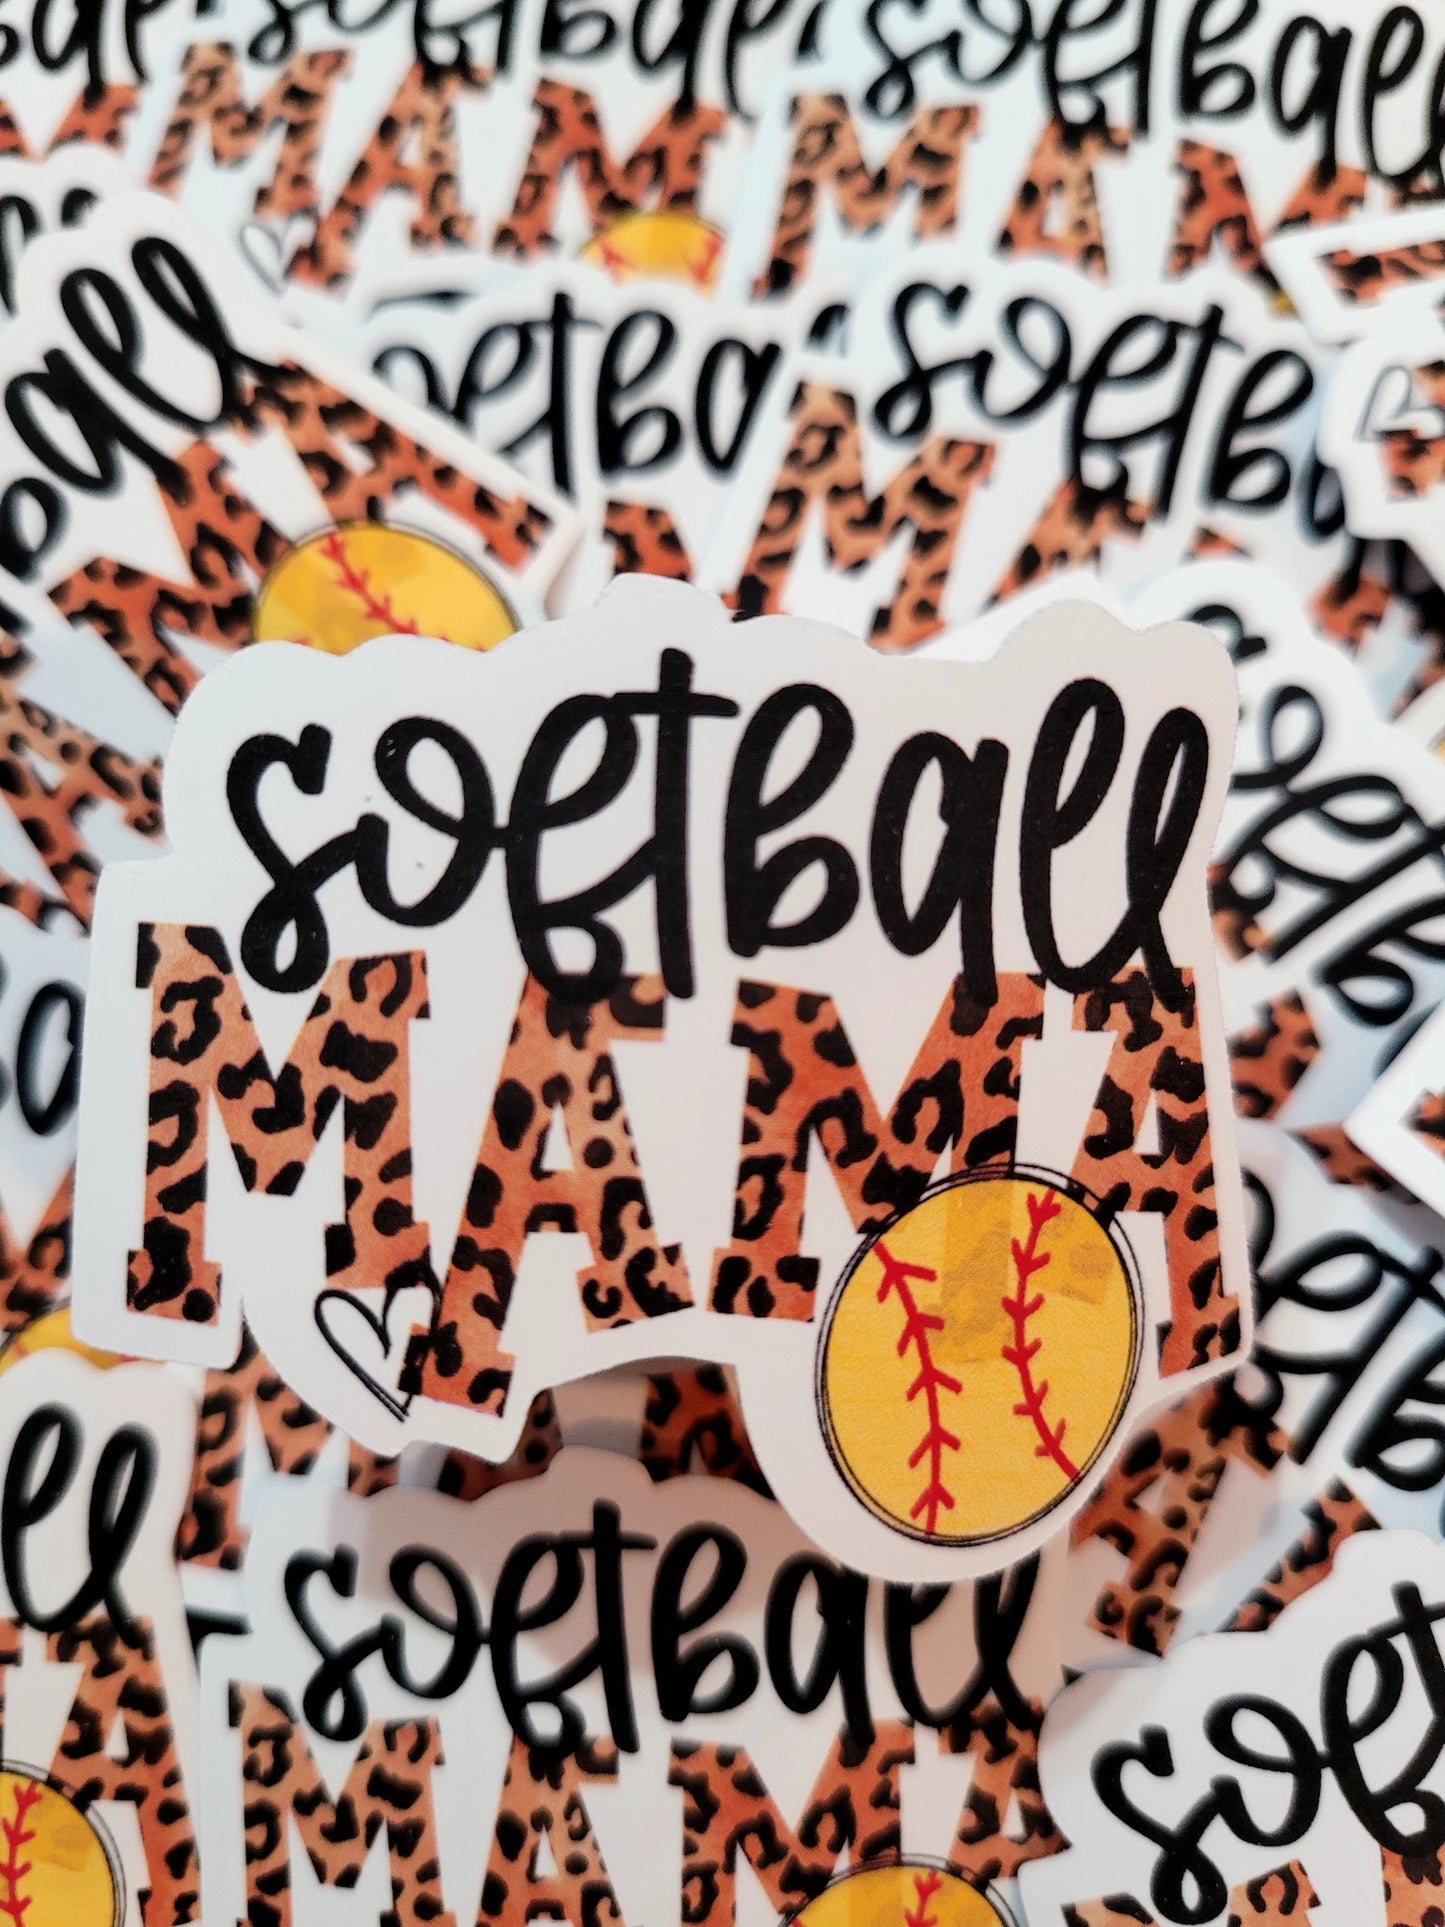 Softball Mama leopard Die cut sticker 3-5 Business Day TAT